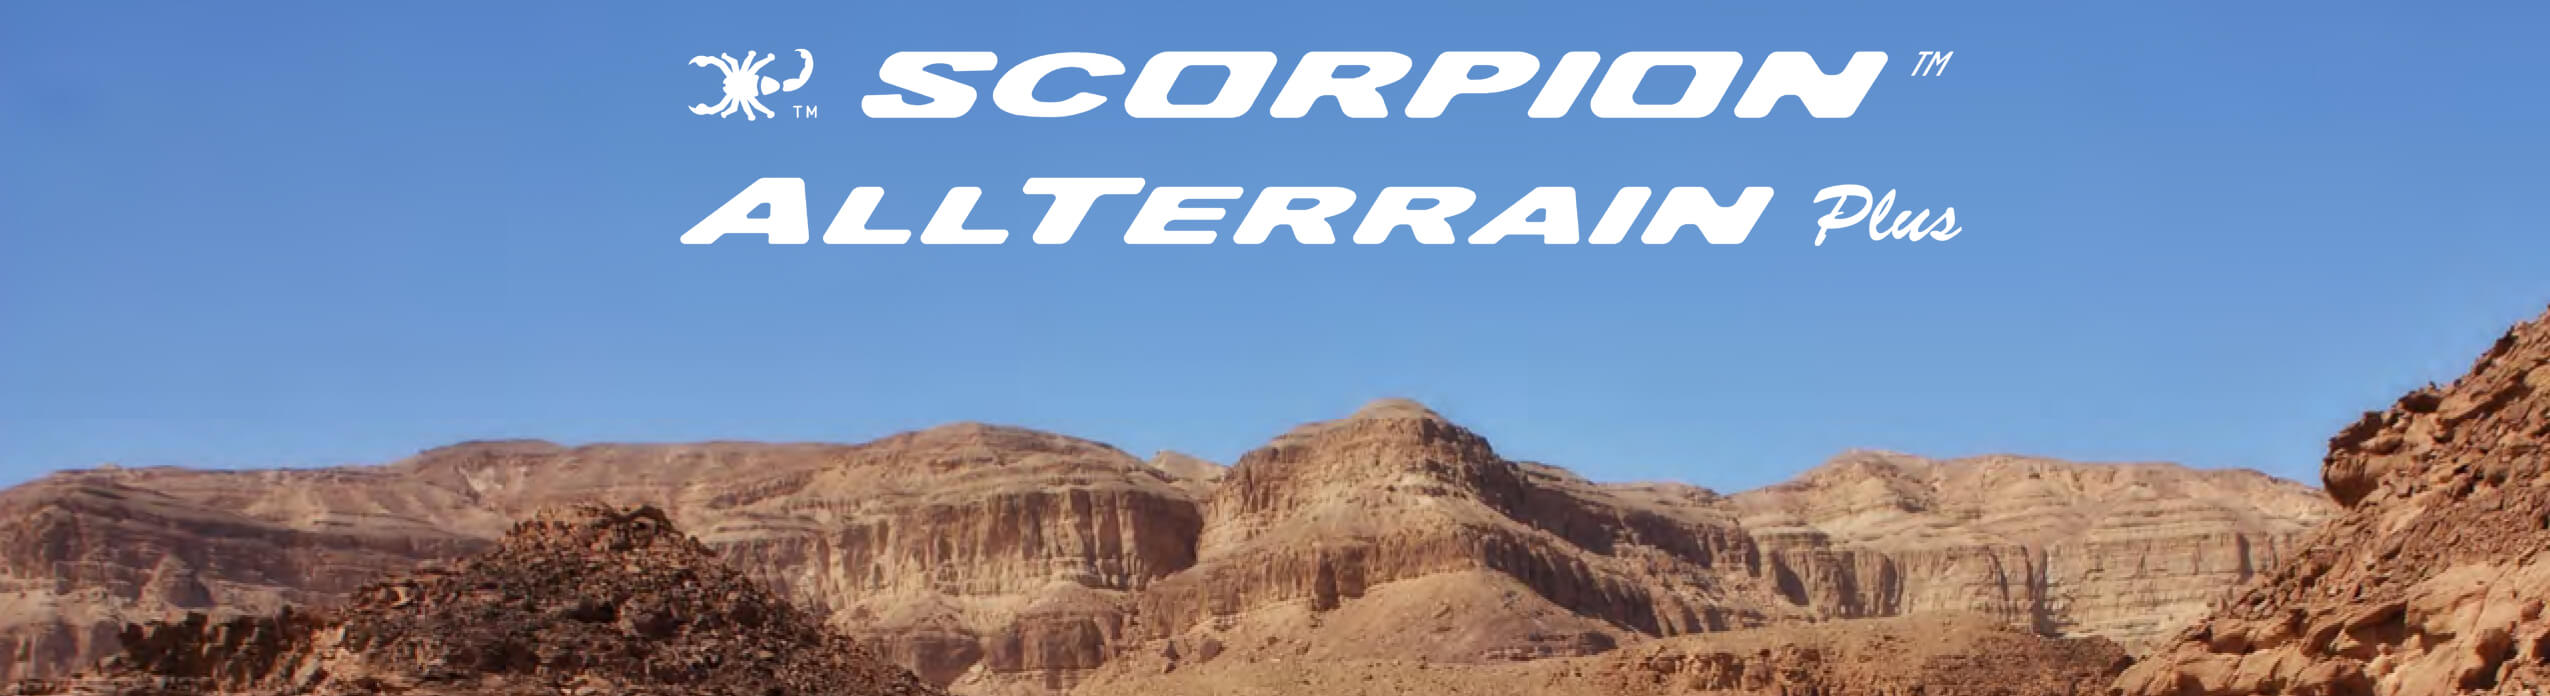 pirelli-scorpion-all-terrain-plus-100-national-rebate-kubly-s-automotive